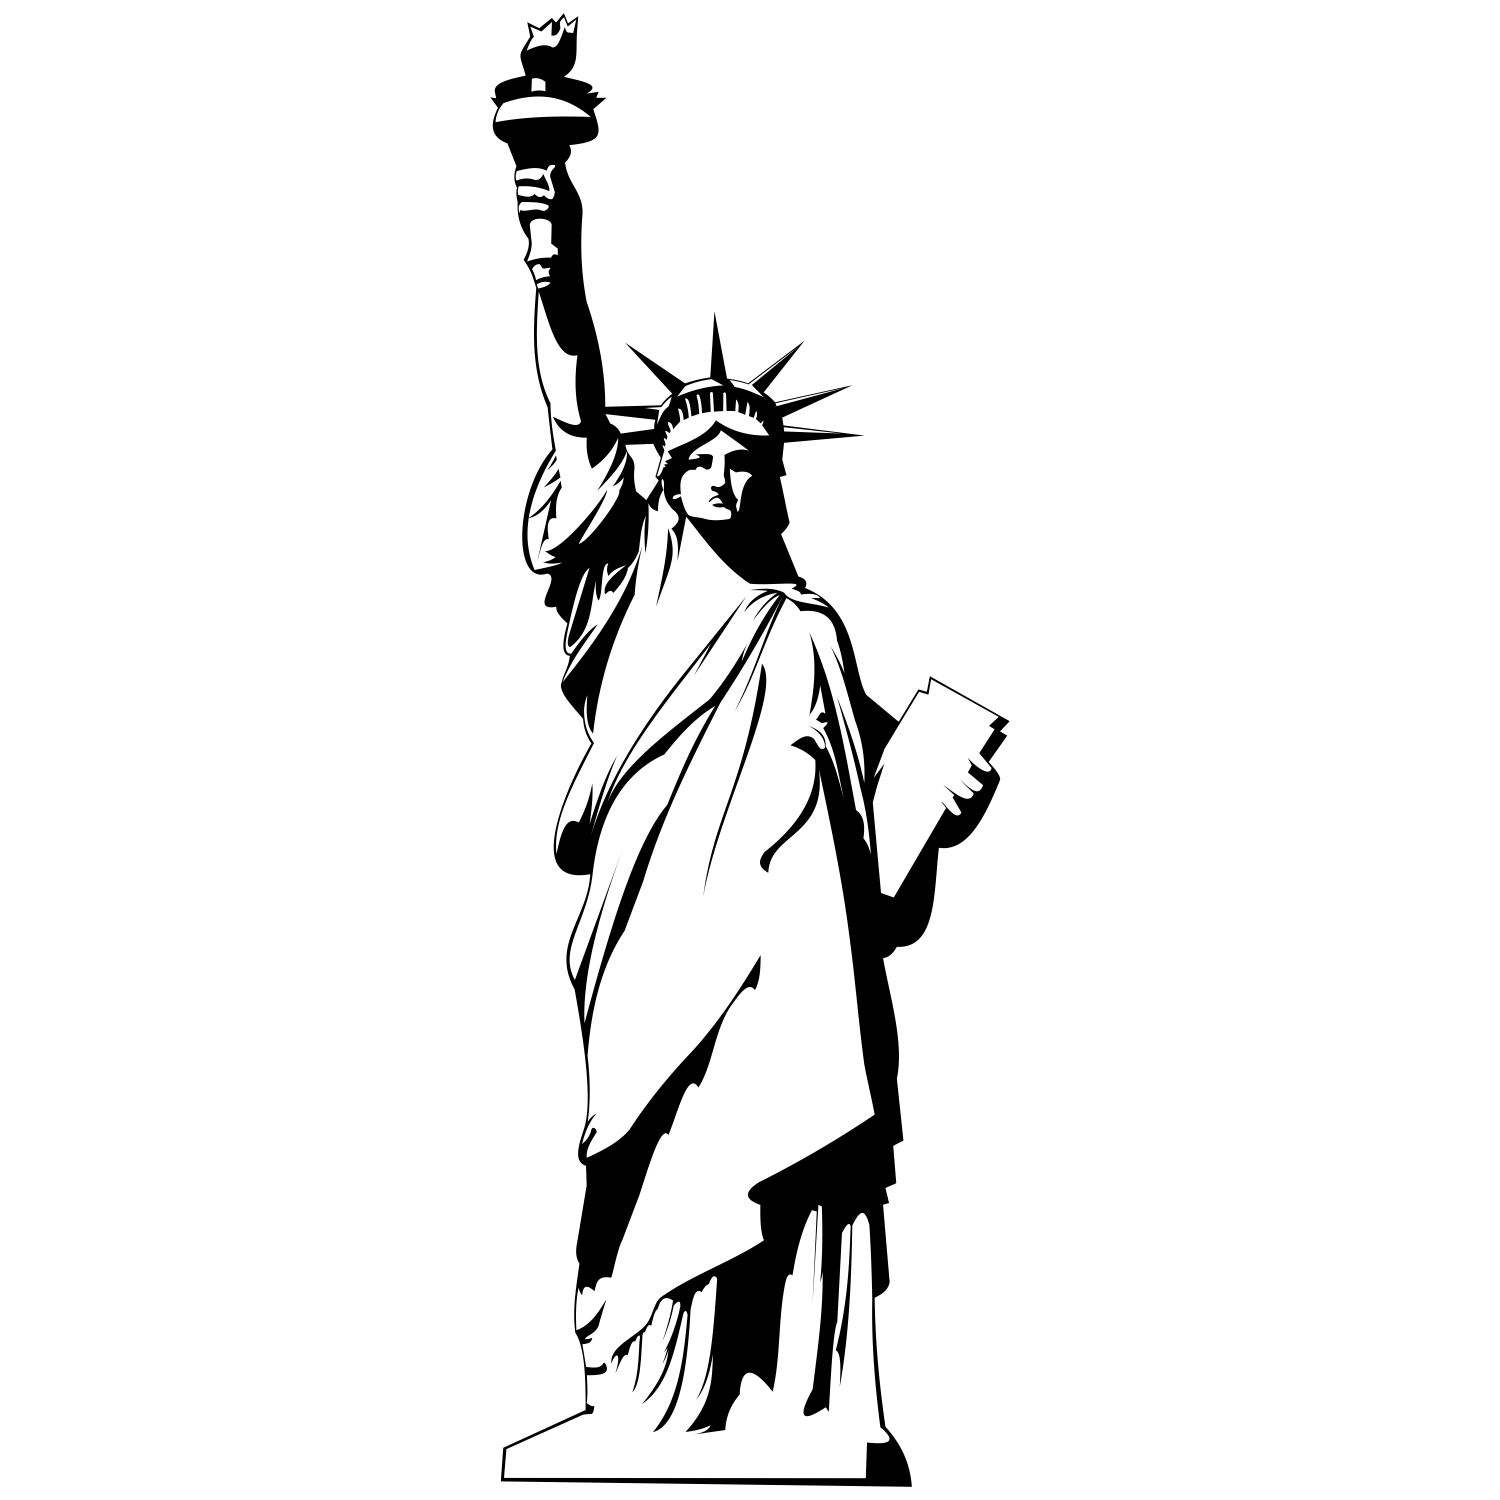 Statue of liberty vector clipart - ClipartFox